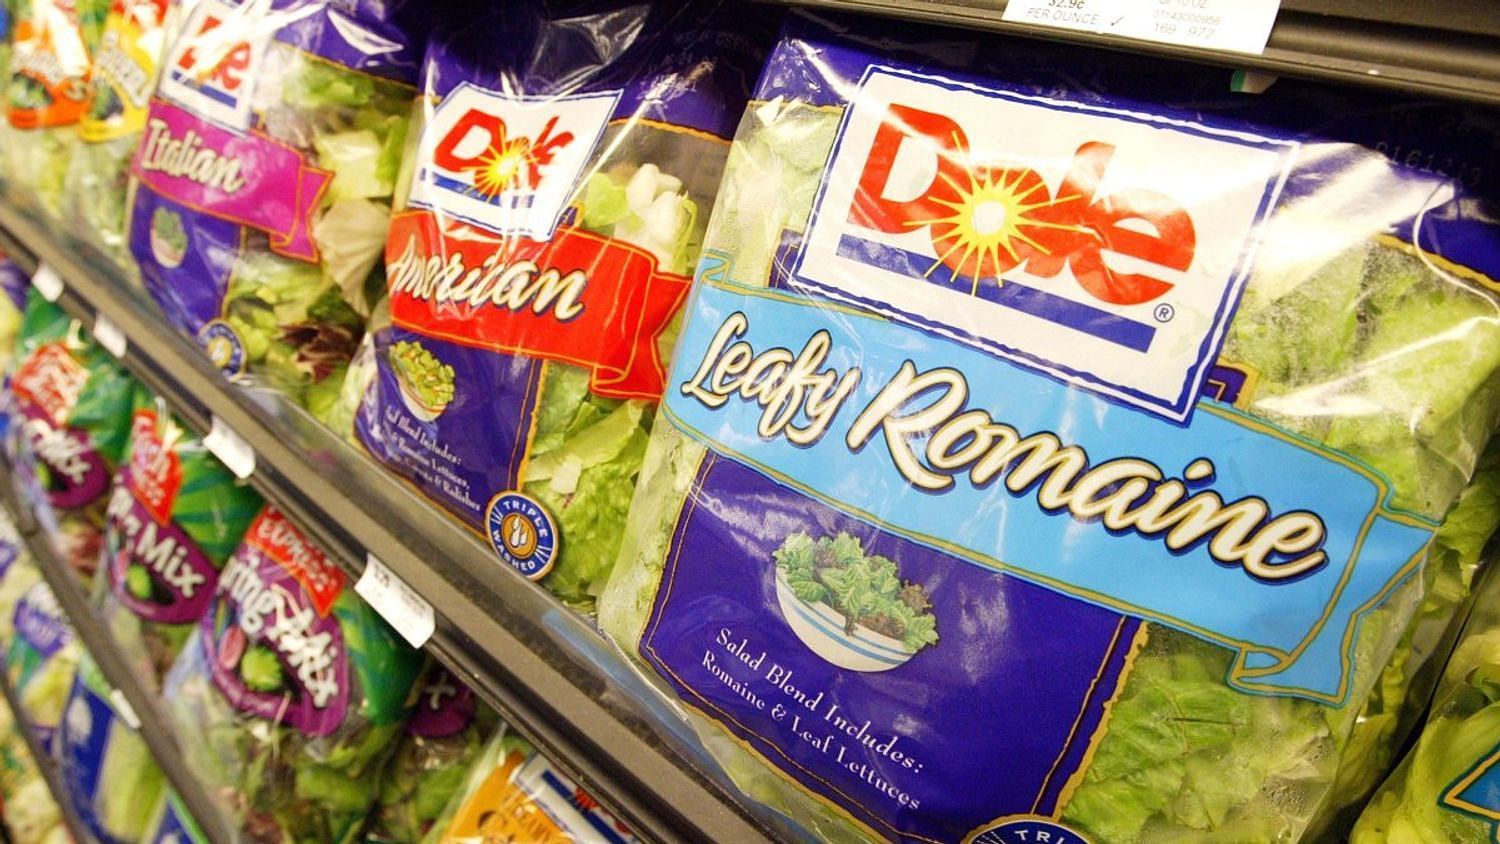 Dole salad consumption leading to foodborne illness (Image via Getty Images)